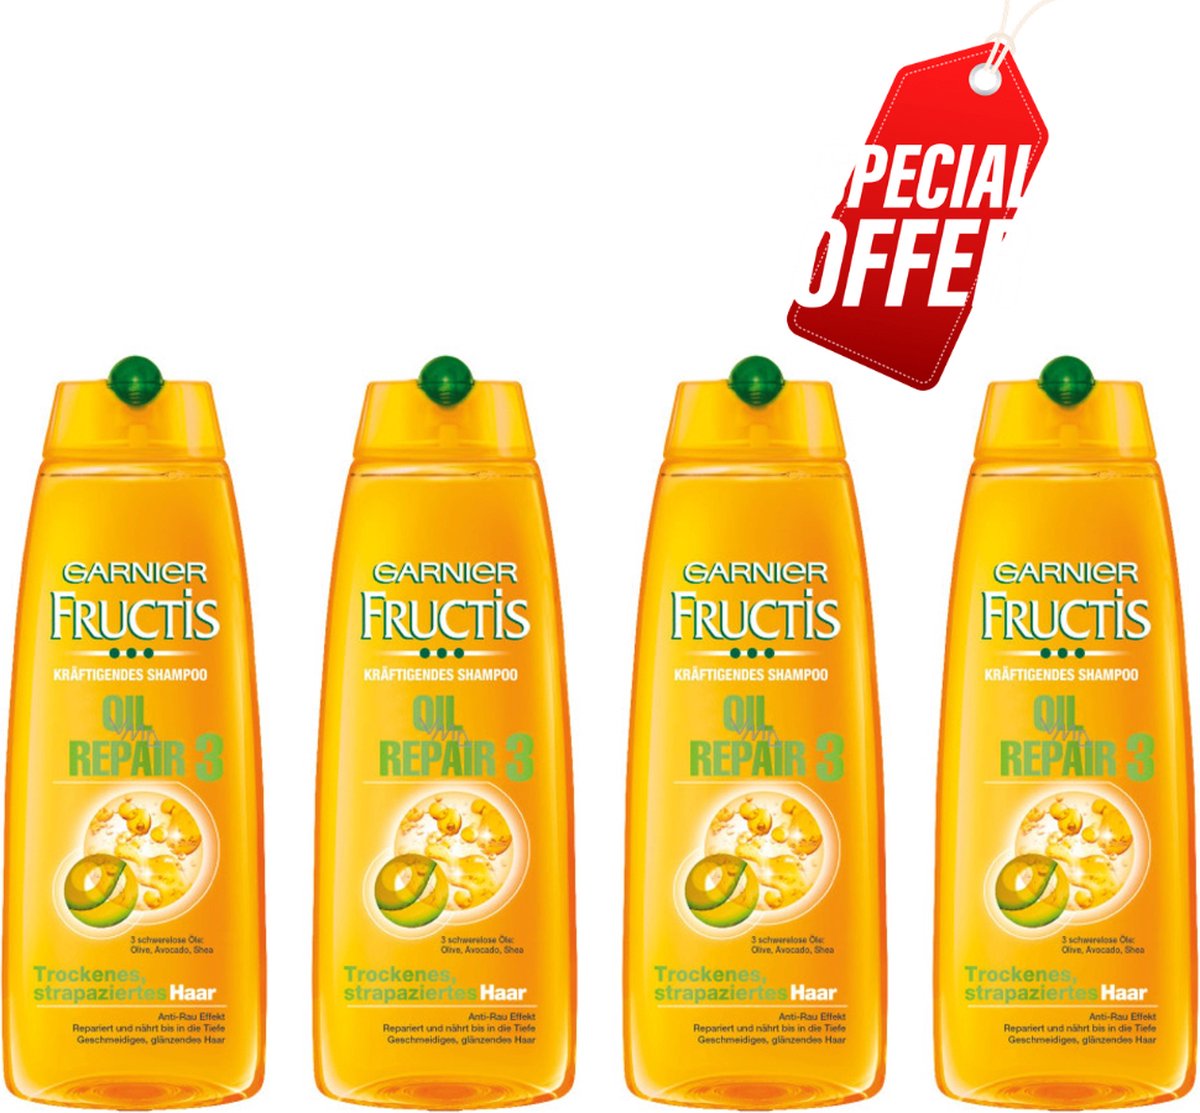 Garnier Fructis Oil Repair 3 Shampoo Bundel Voordeel - 4 x 250 ml